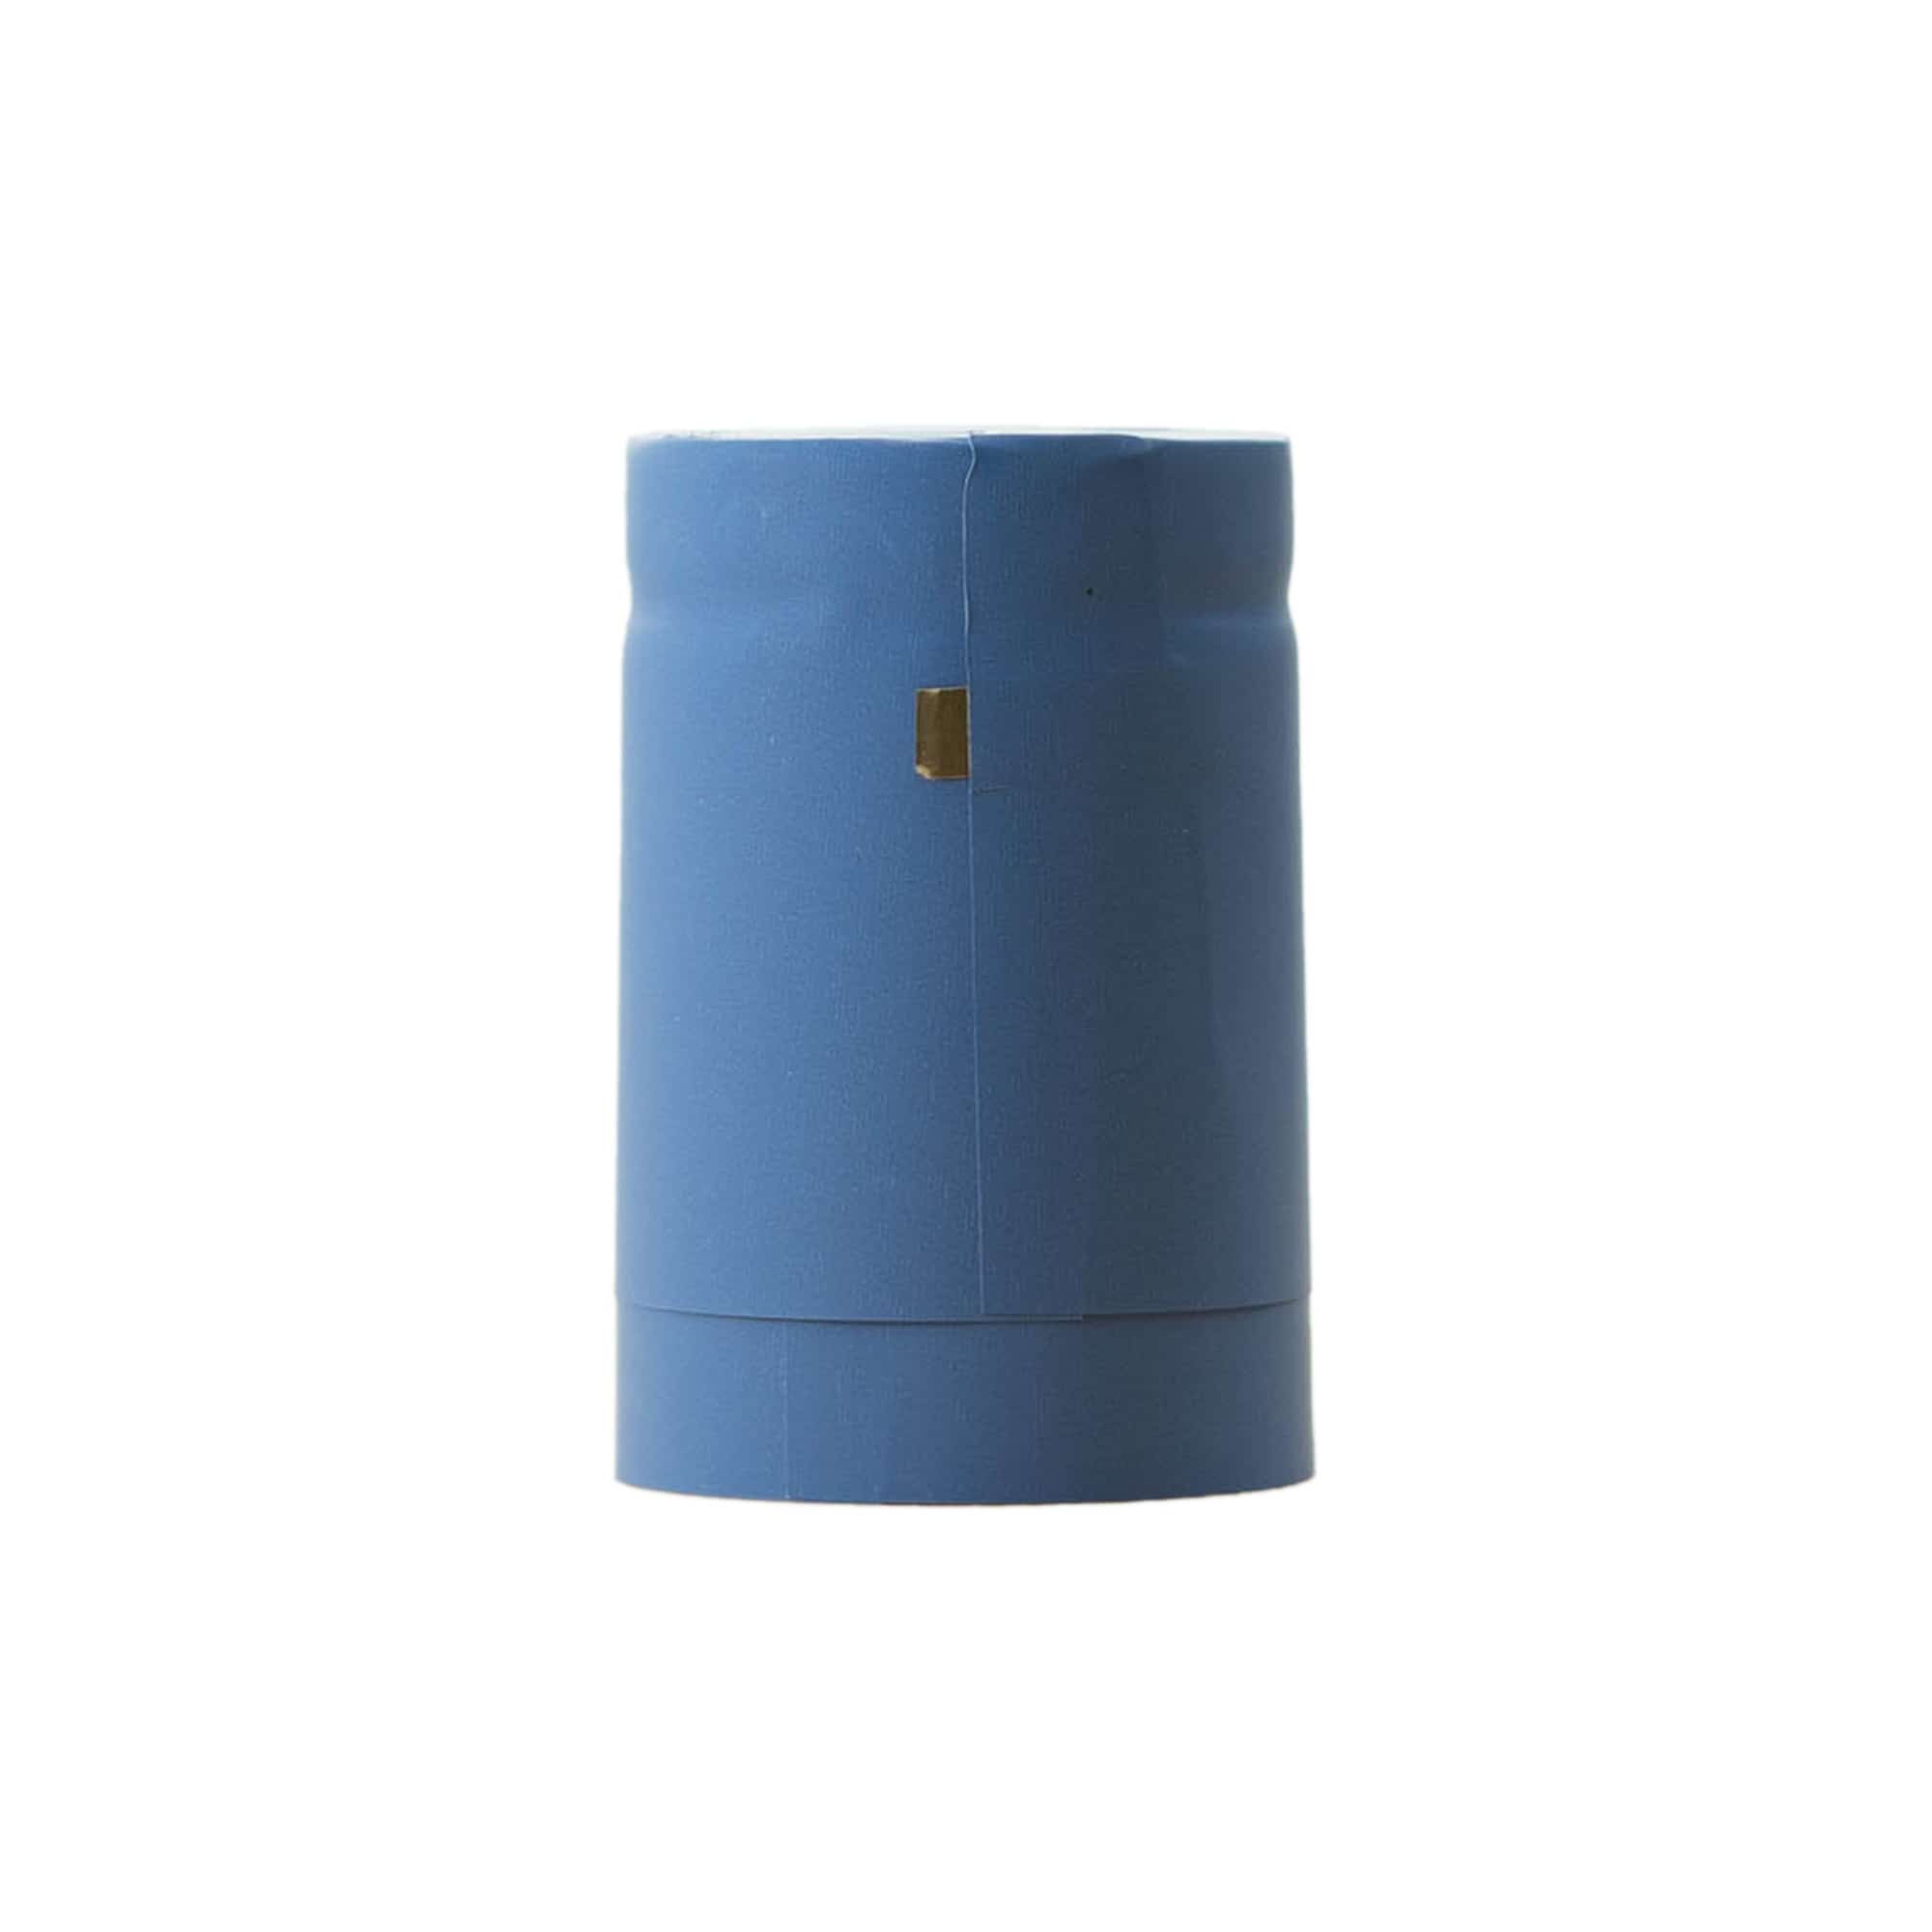 Heat shrink capsule 32x41, PVC plastic, sky blue